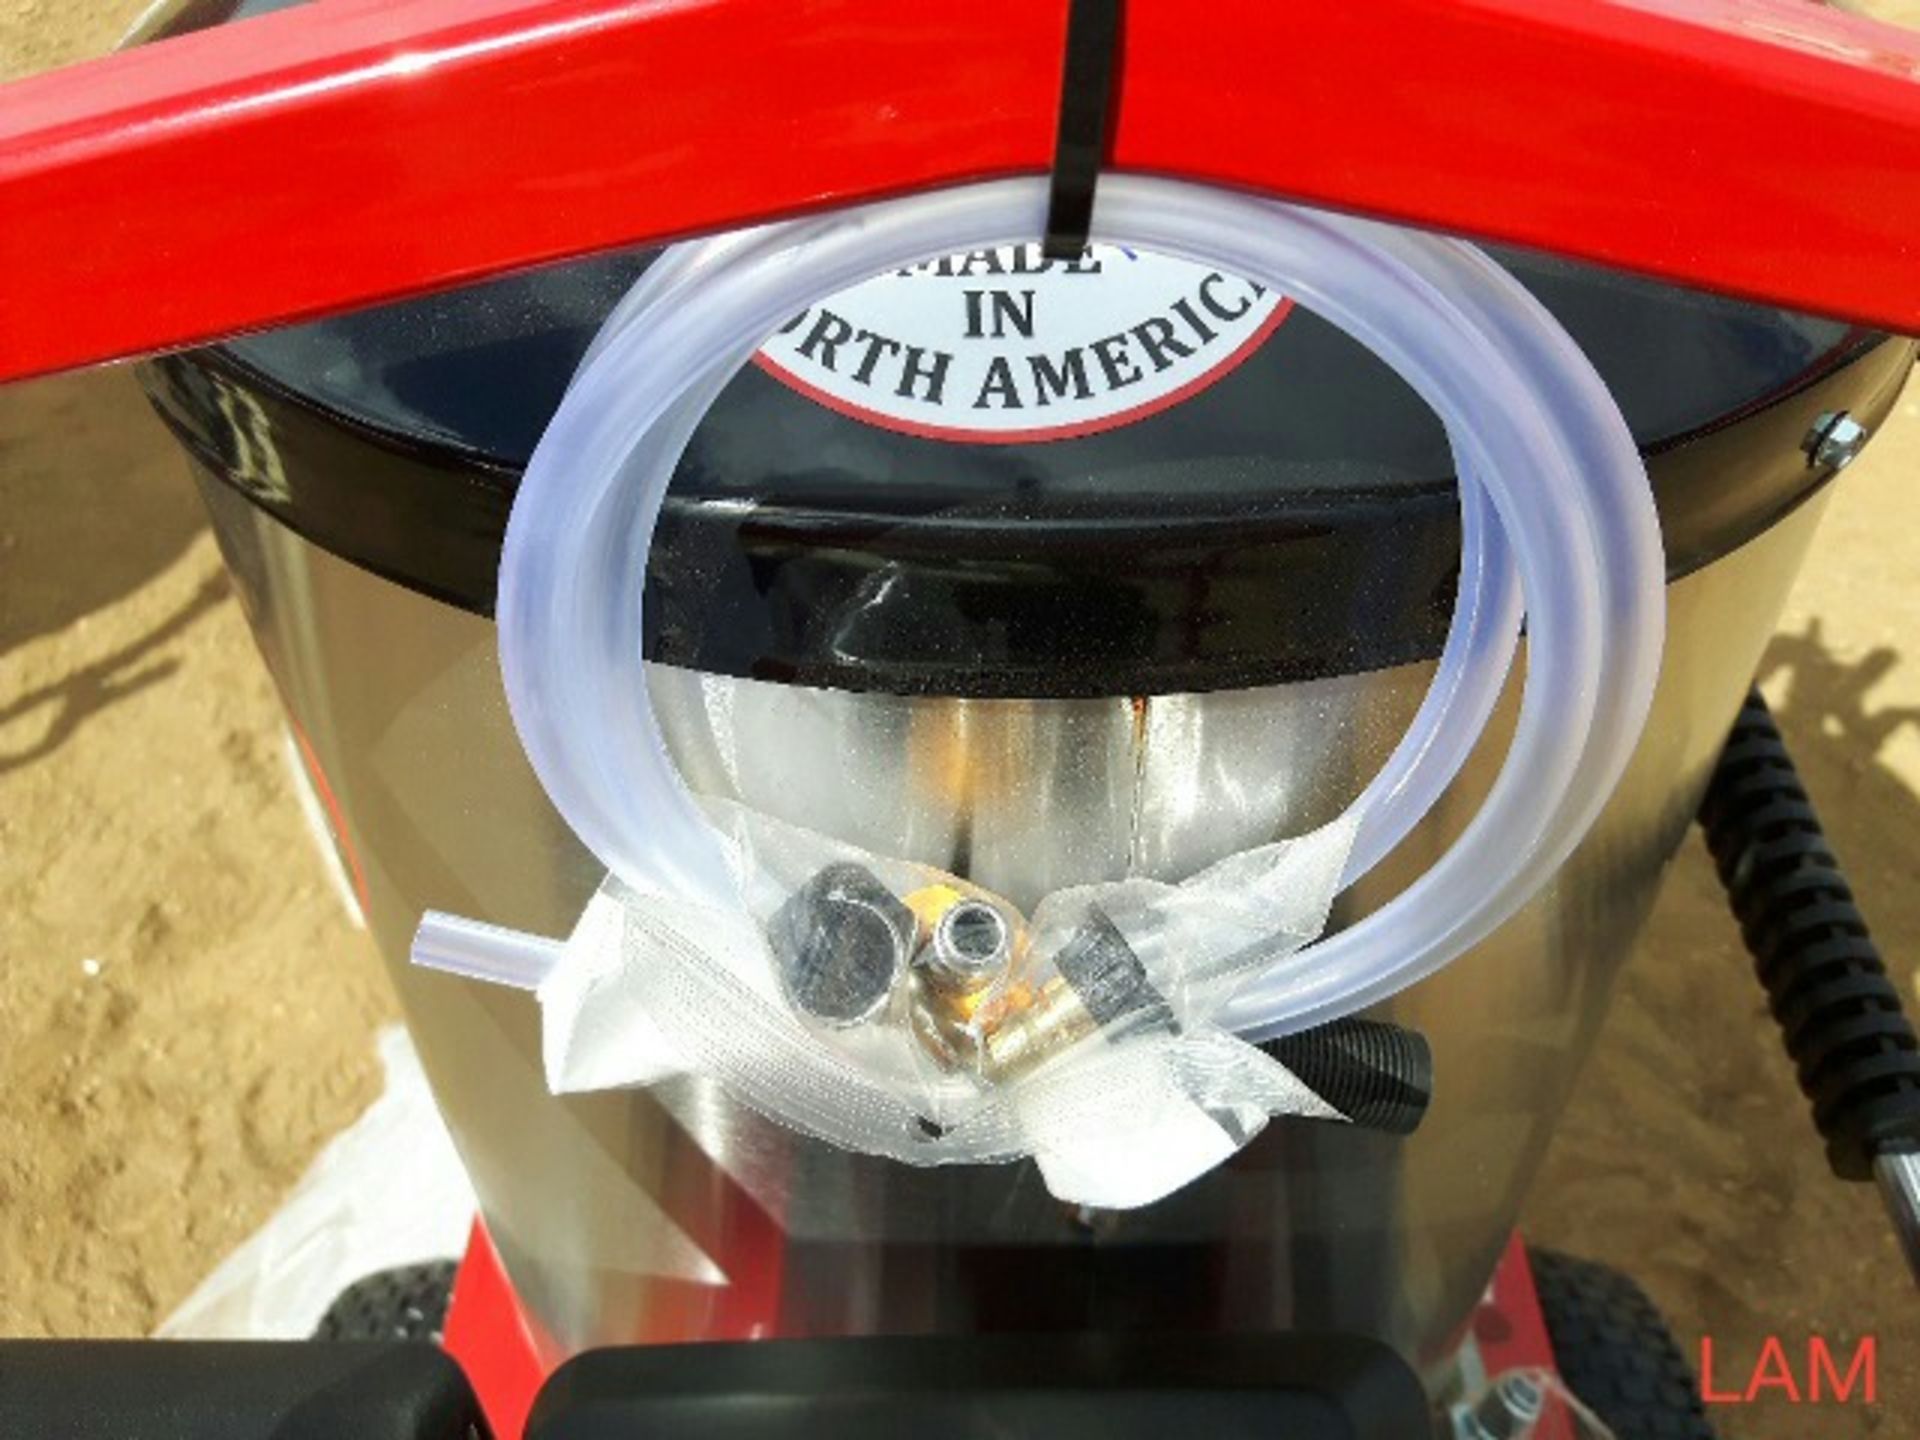 Easy Kleen Diesel Fired Hot Water Pressure Washer - Image 4 of 4